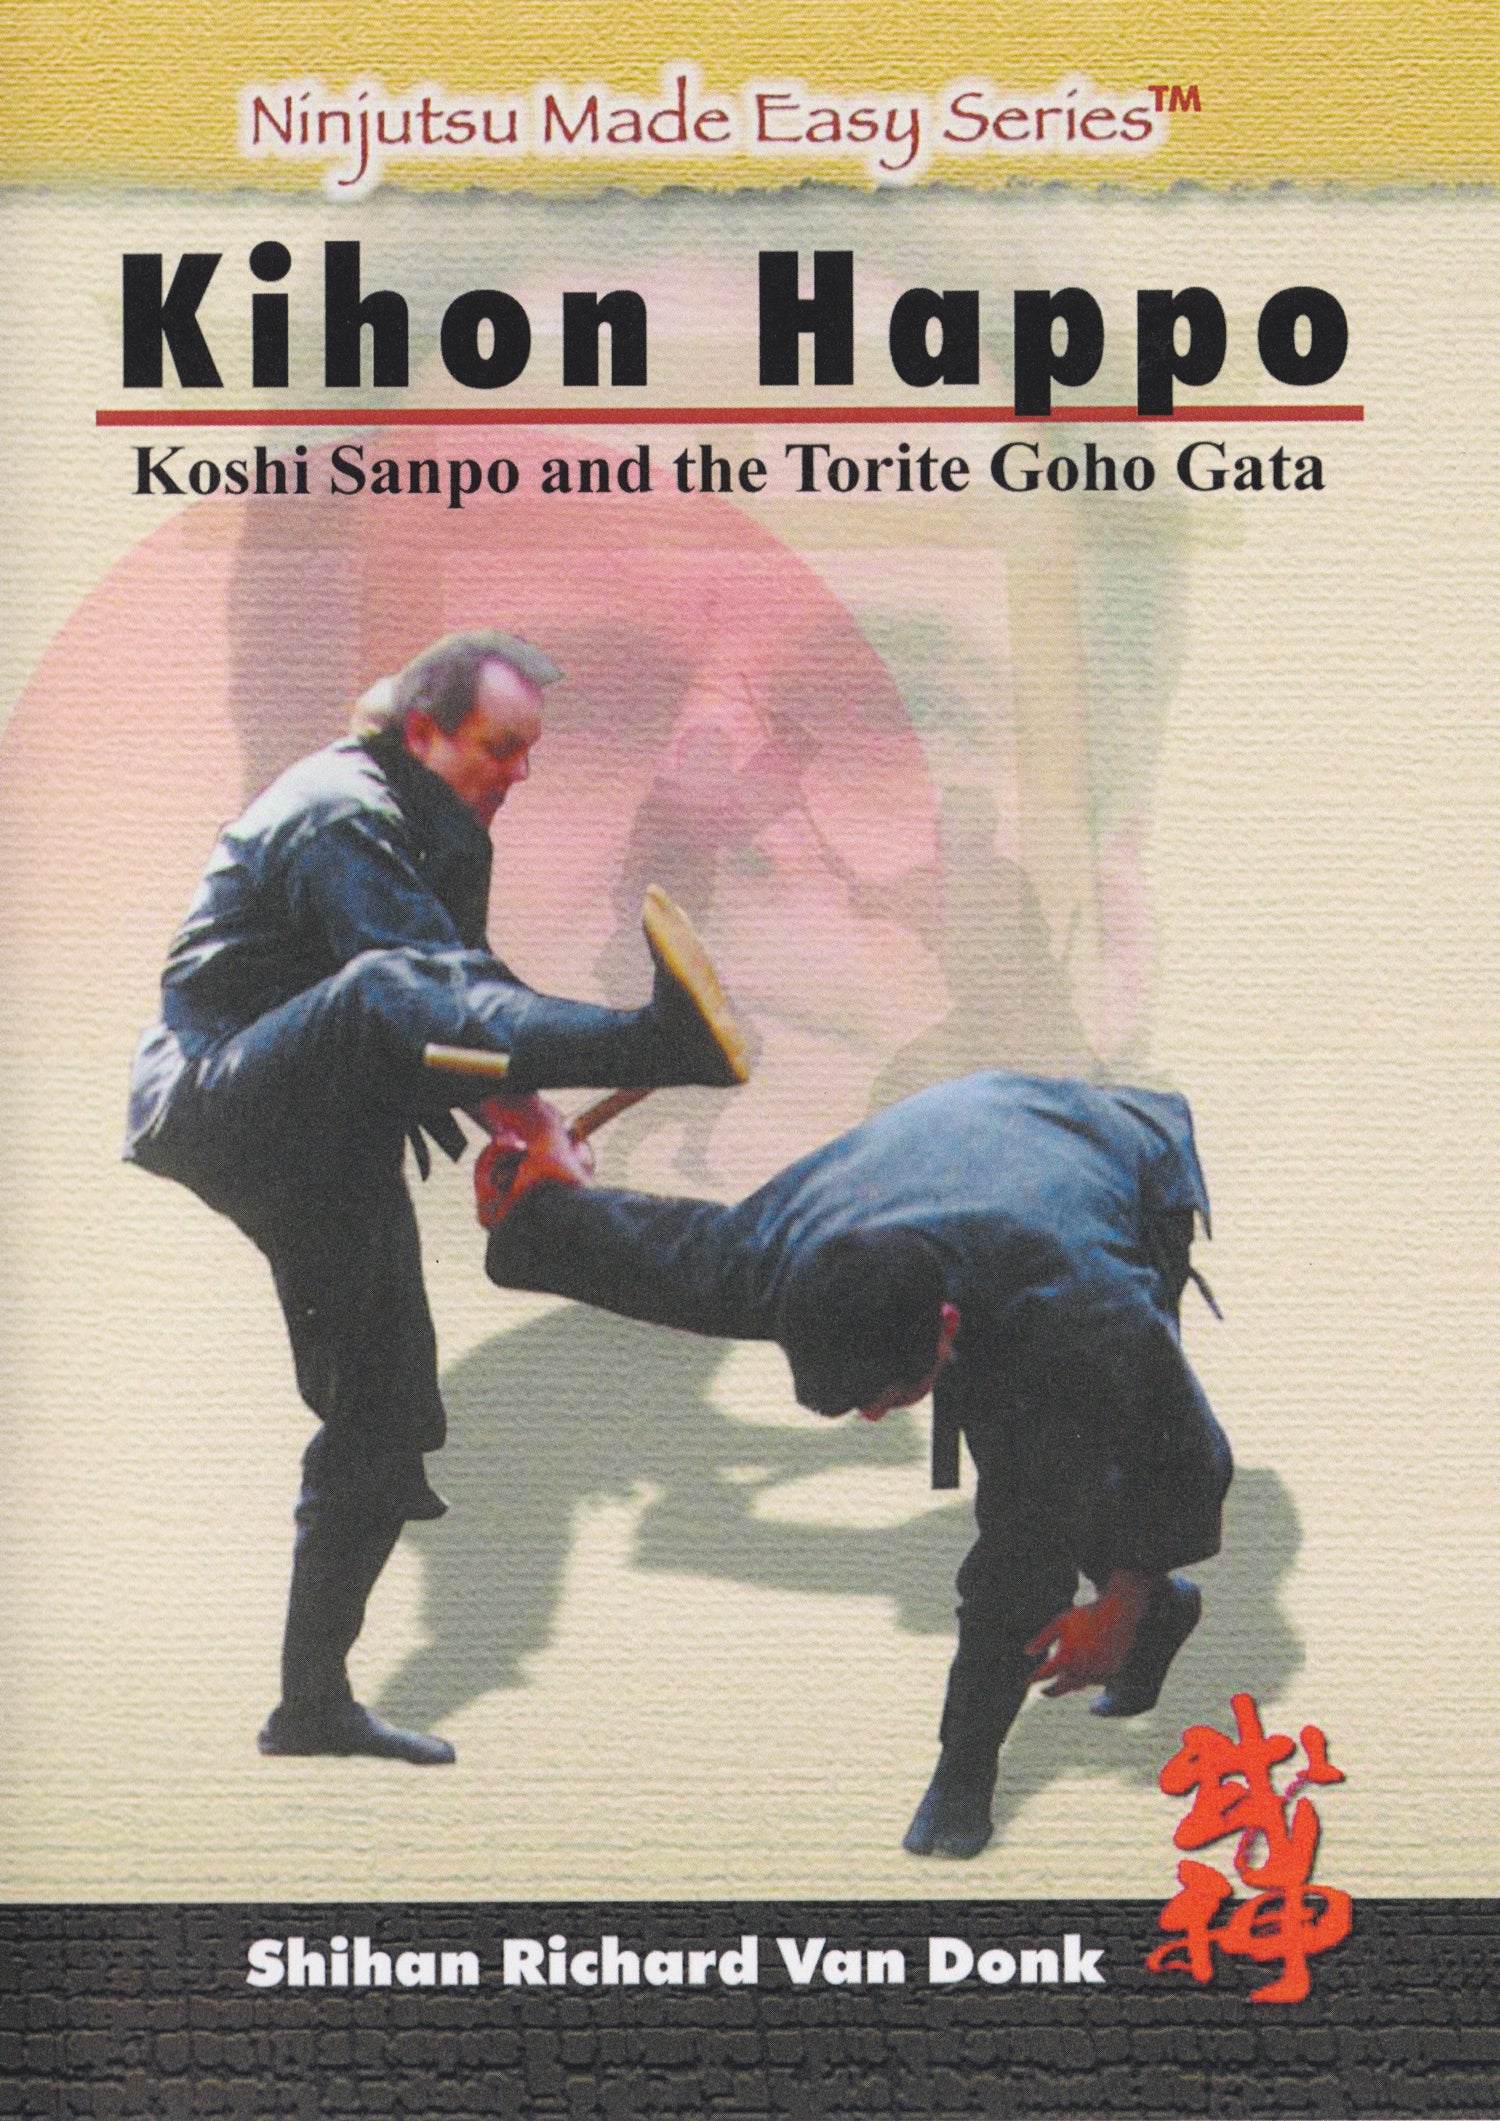 Kihon Happo DVD by Richard Van Donk